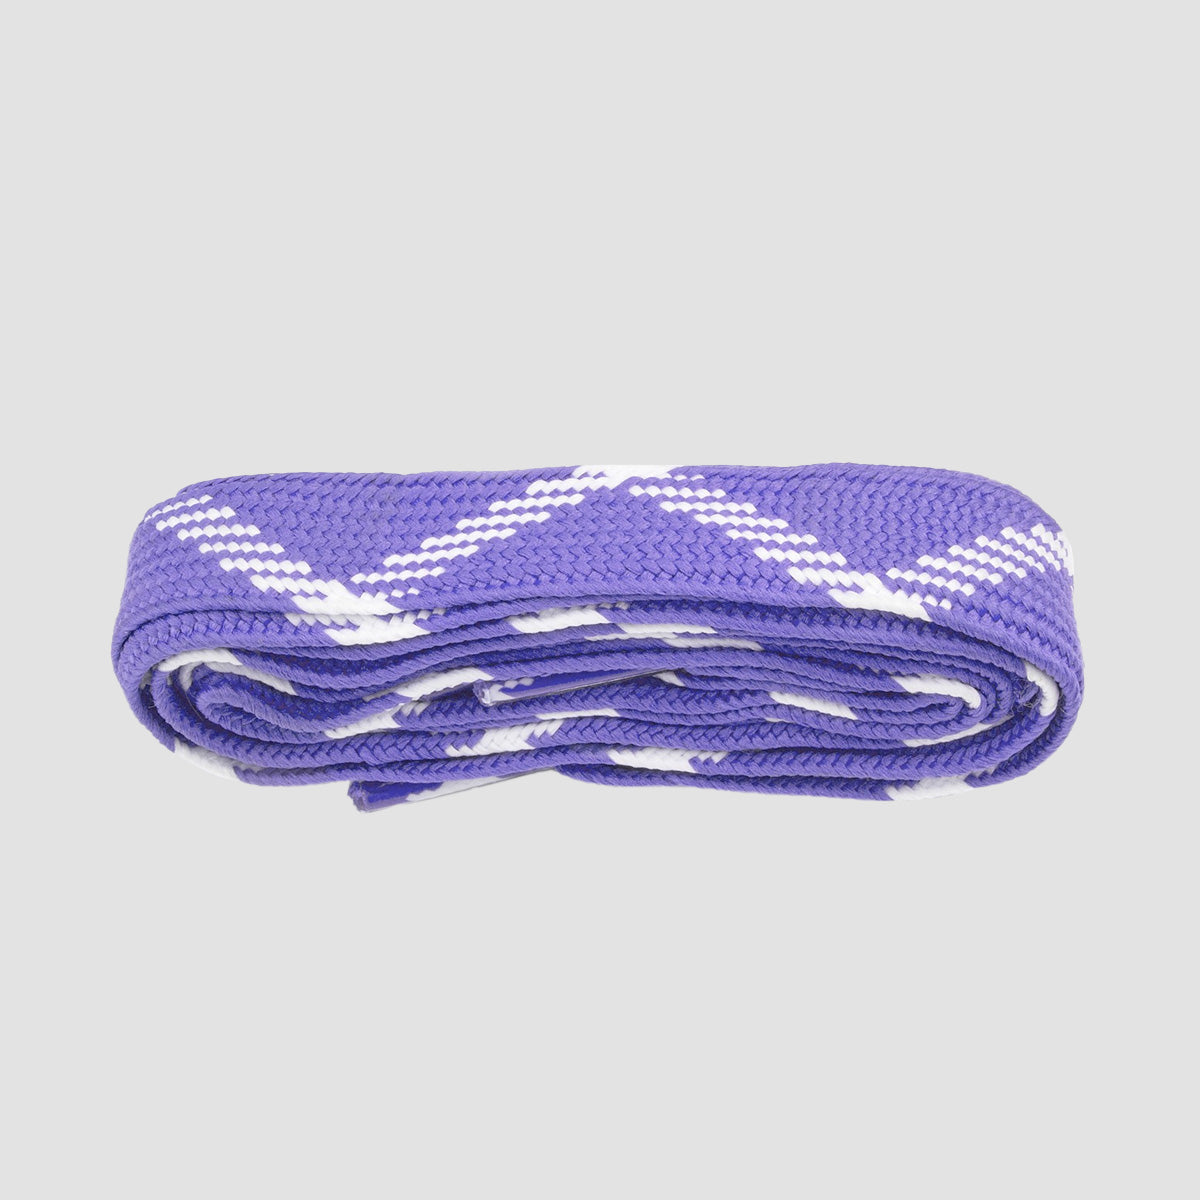 ShoeString Crazy 140cm Fat Flat Laces (Blister Pack) Purple/White